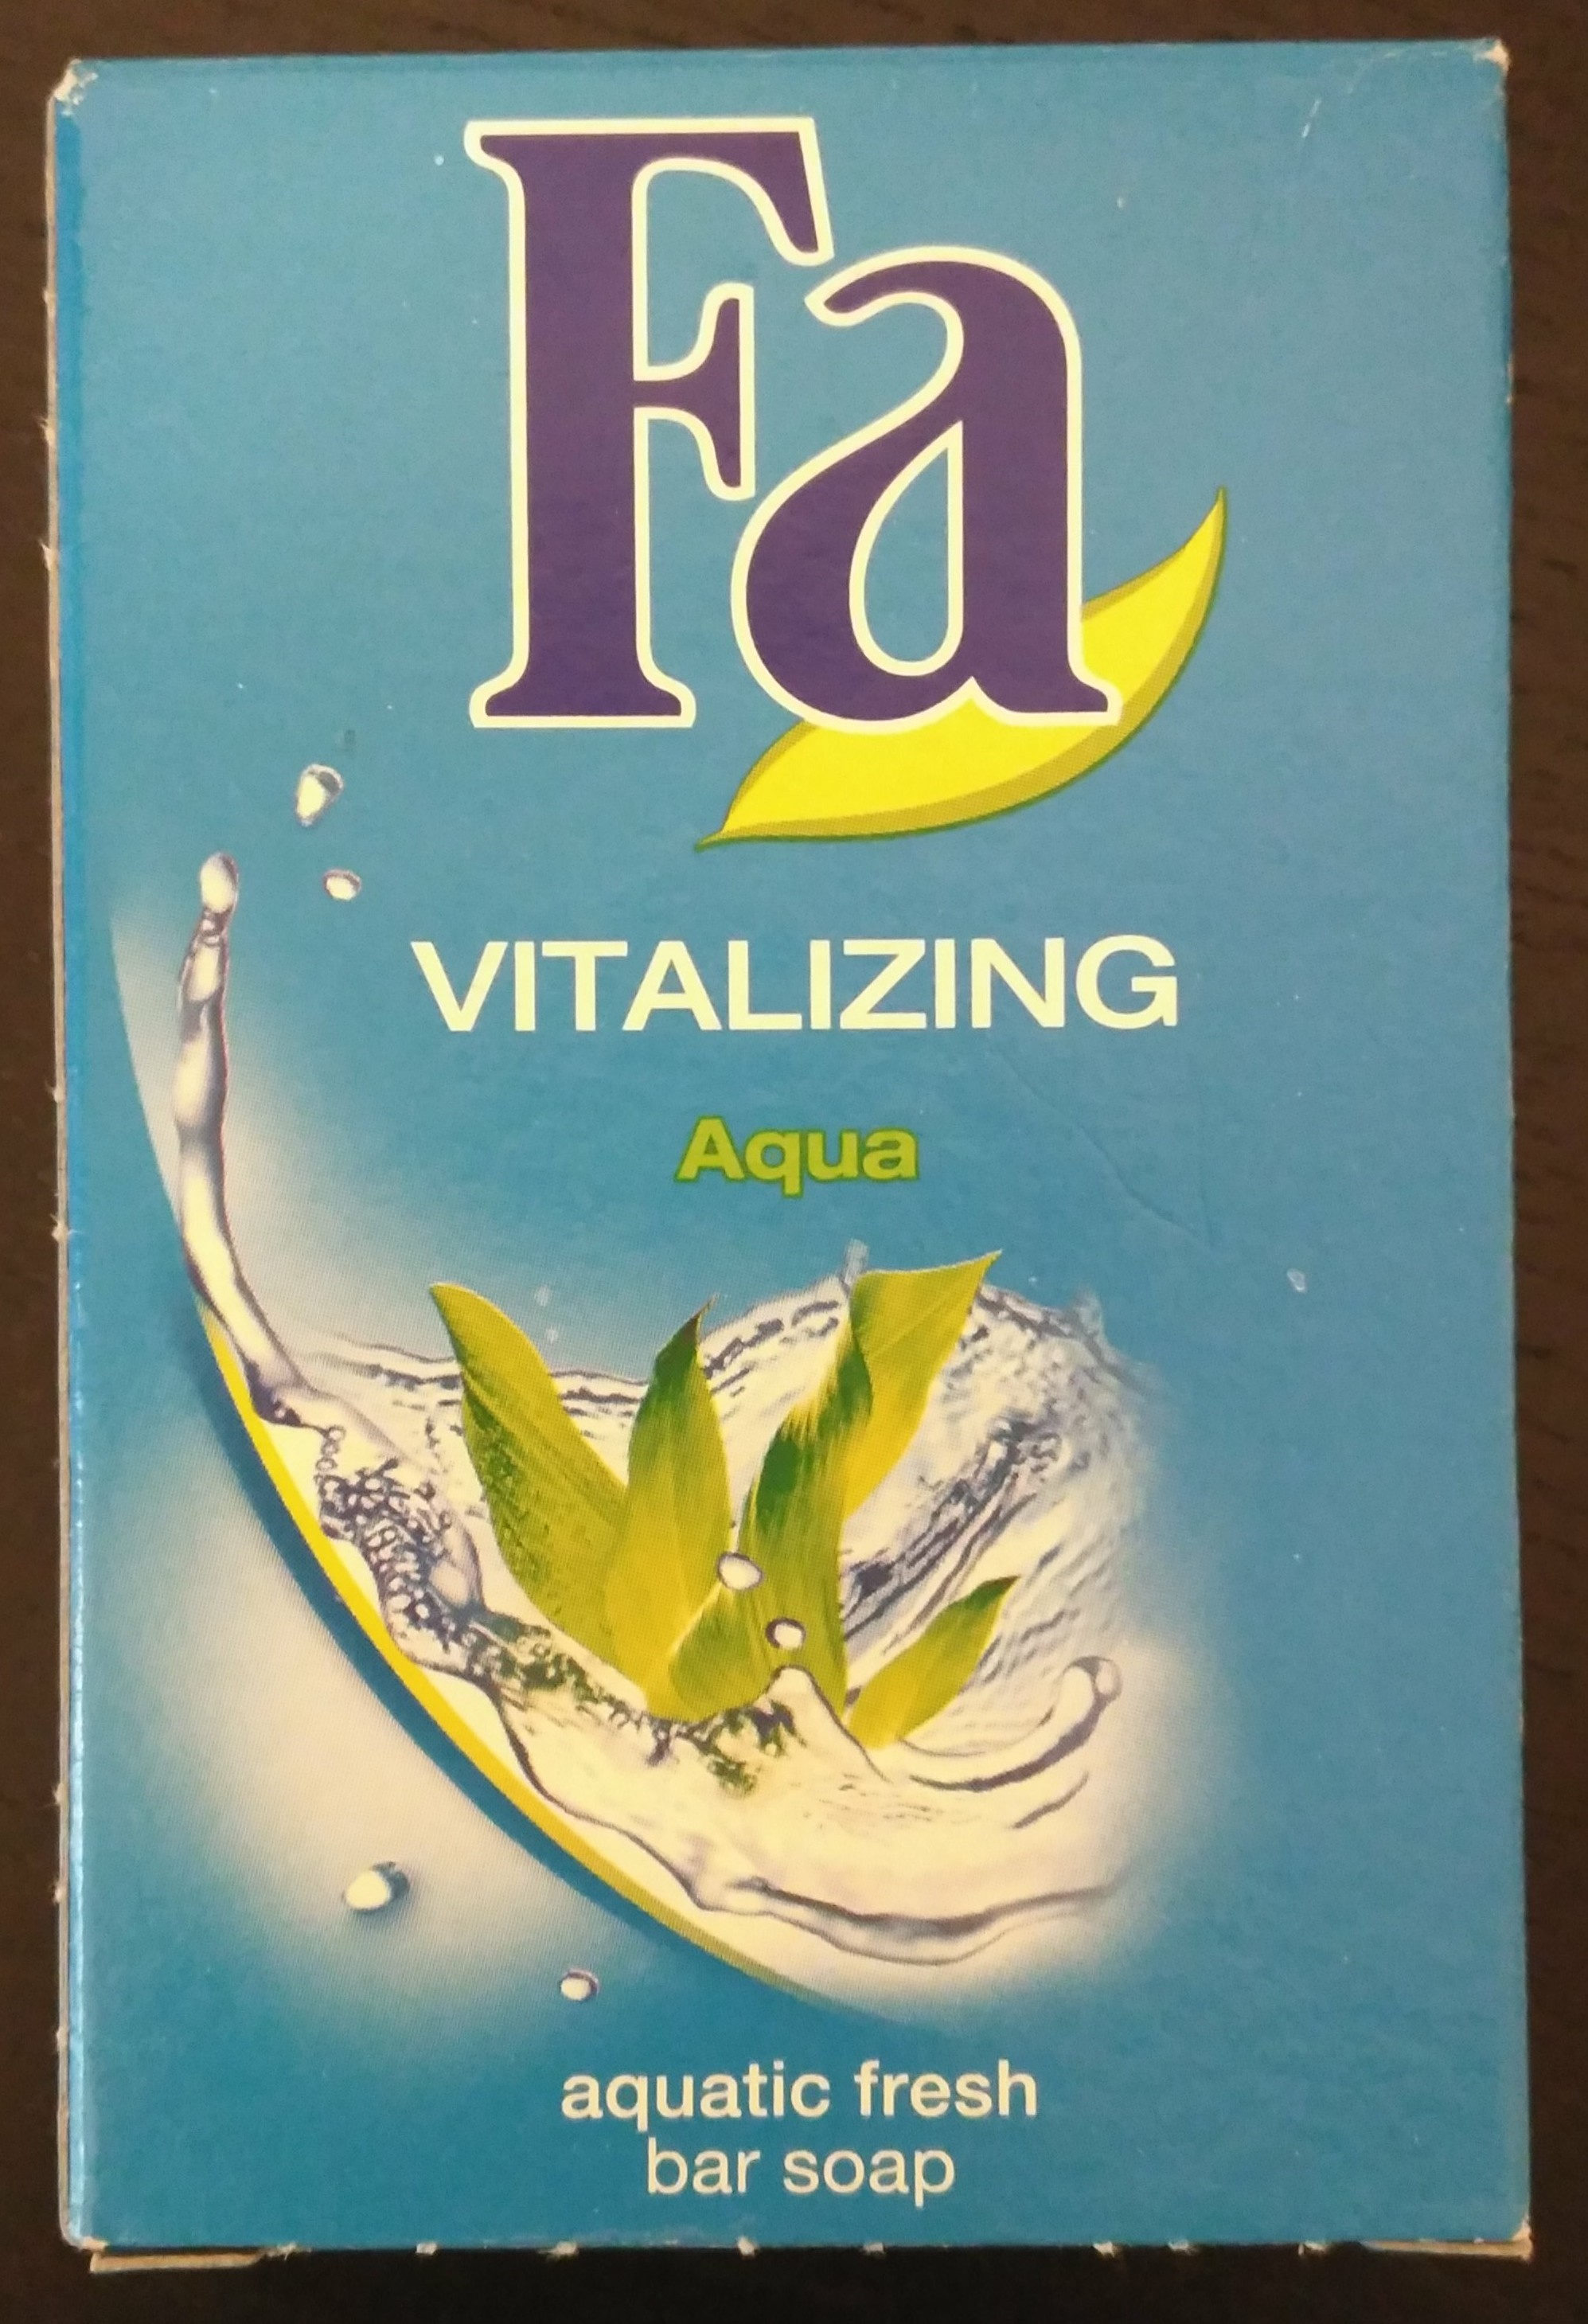 Vitalizing Aqua Festseife mit aquatisch-frischem Duft - Produto - de